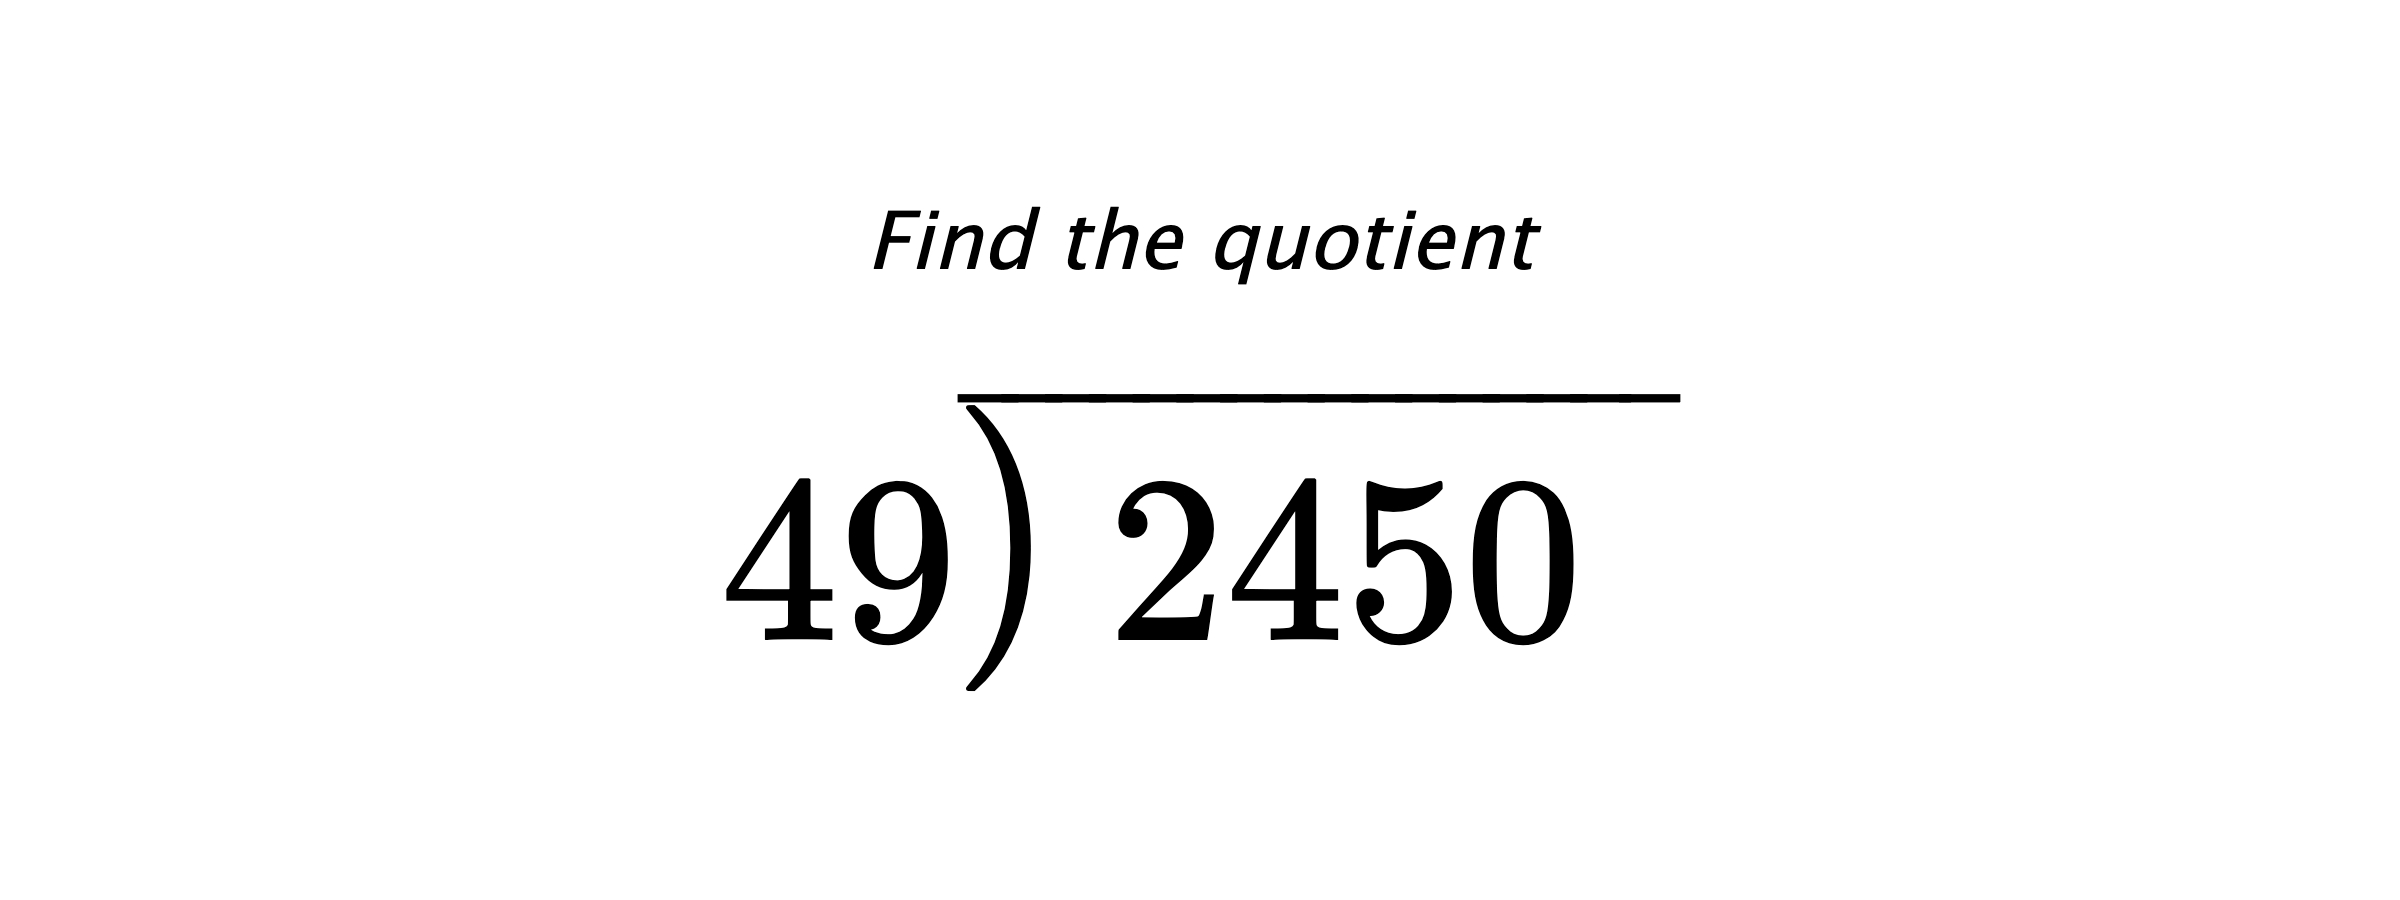 Find the quotient $ 49{\overline{\smash{\raise.3ex\hbox{$\big)$}}\,2450\phantom{)}}} $